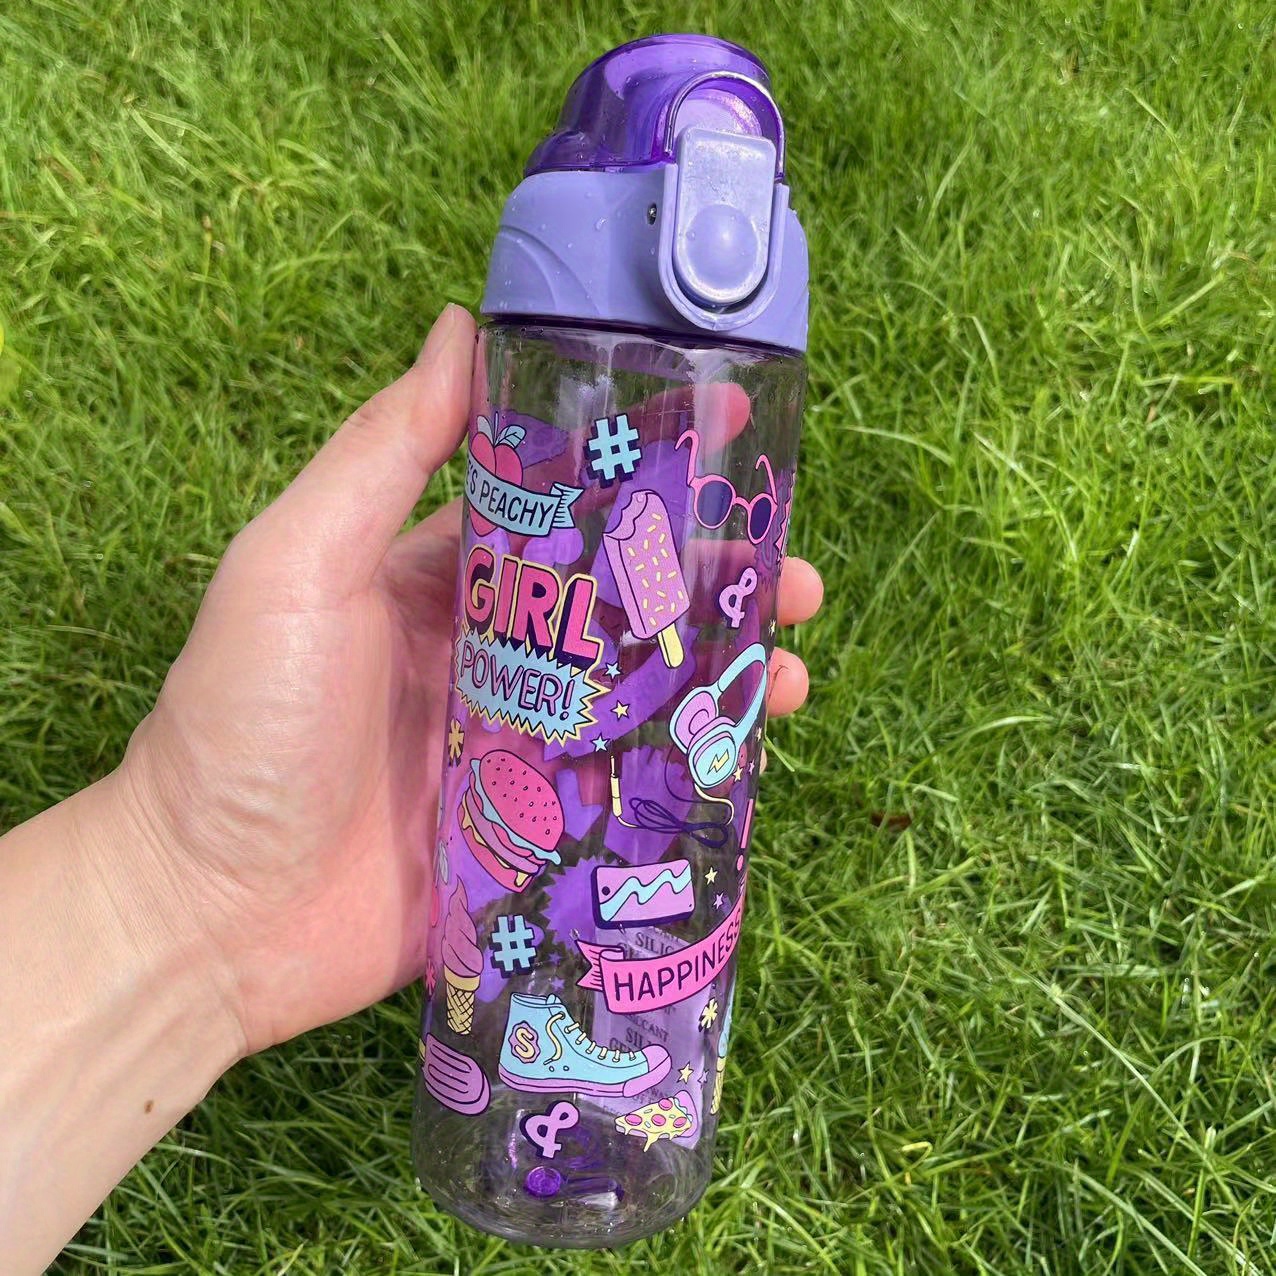 600ml Water Bottle for Girls Outdoor Sport Fitness Water Cup Large Capacity  Spray Bottle BPA Free Drinkware Travel Bottles